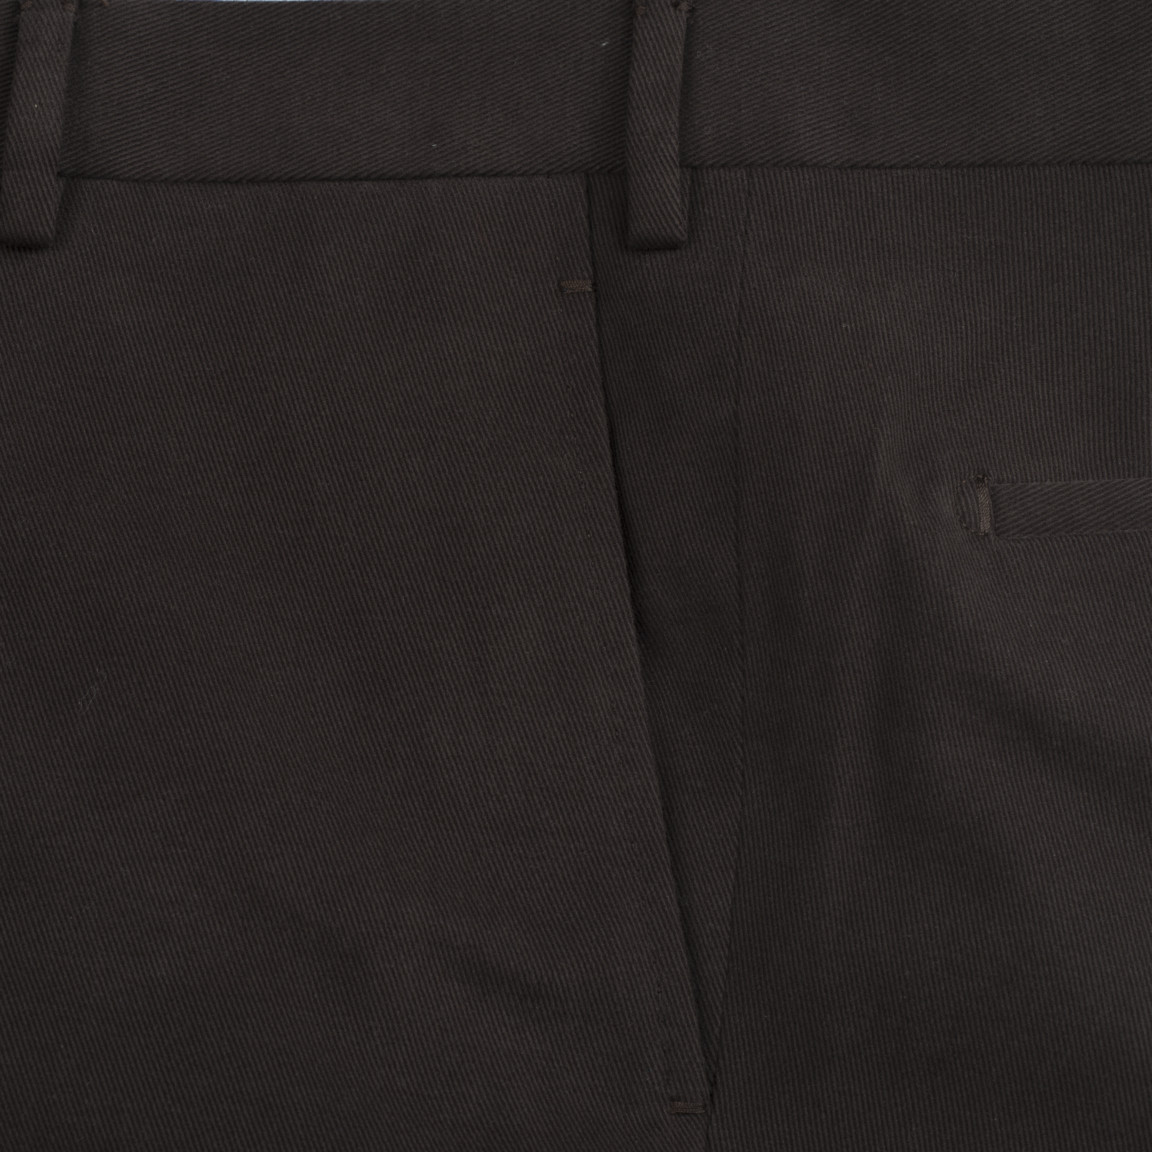 Mariano Rubinacci - Dark brown moleskin trousers